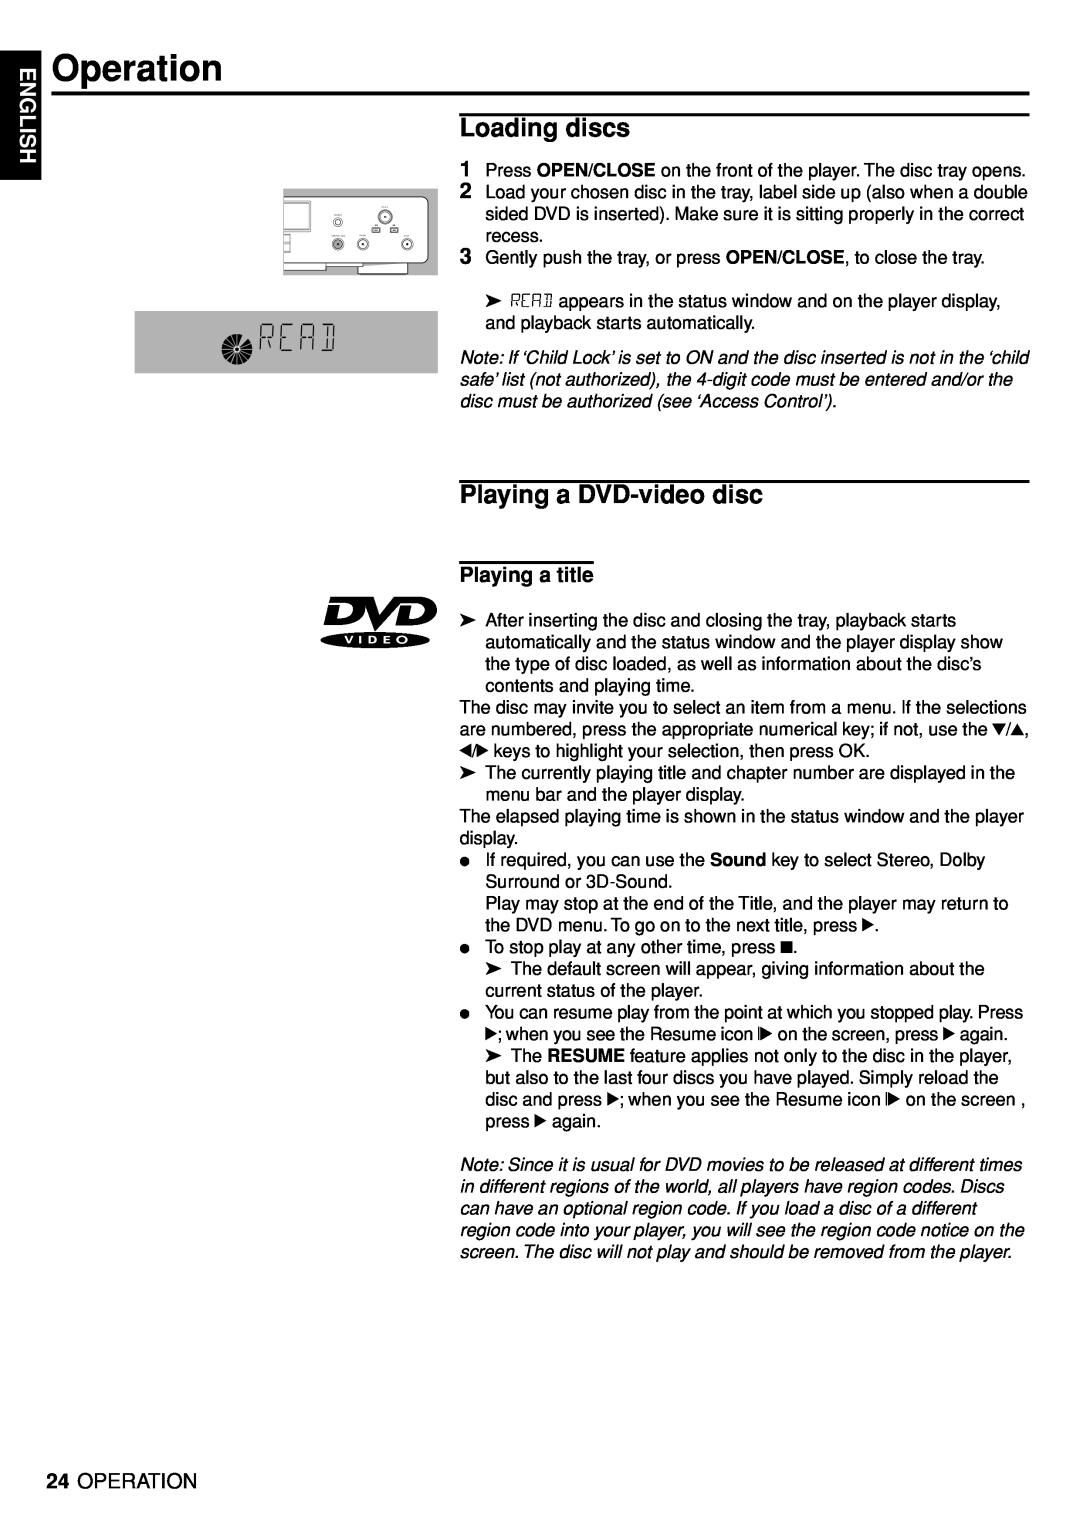 Marantz DV4100 manual Operation, Loading discs, Playing a DVD-video disc, Playing a title, English 